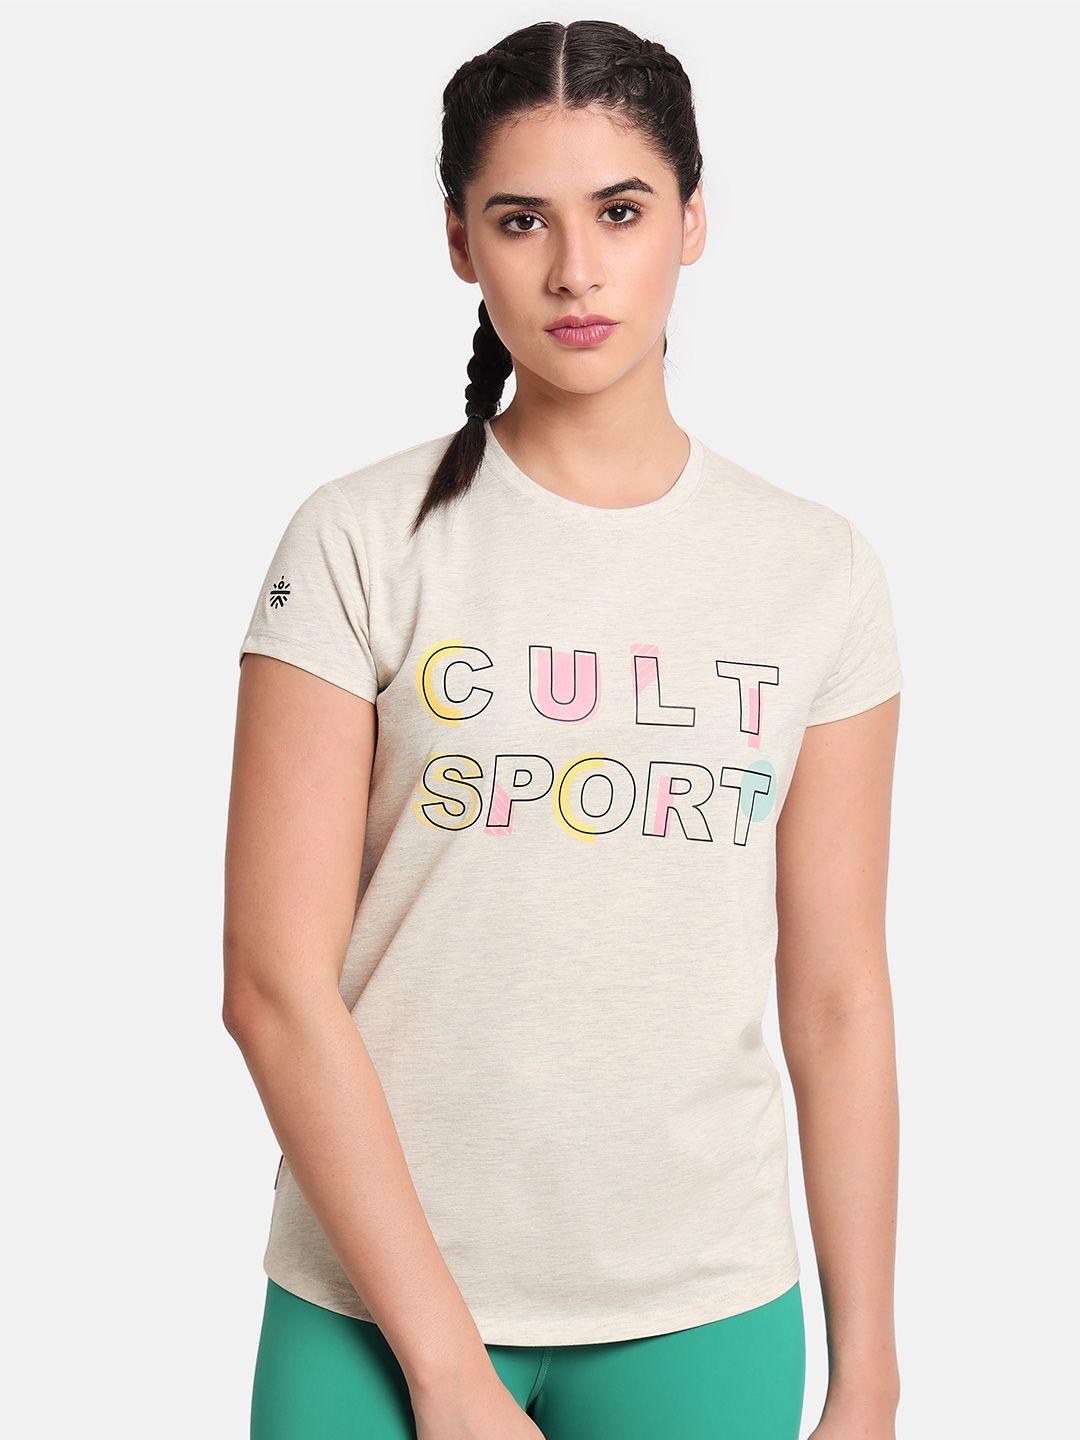 cultsport typographic printed round neck sports t-shirt